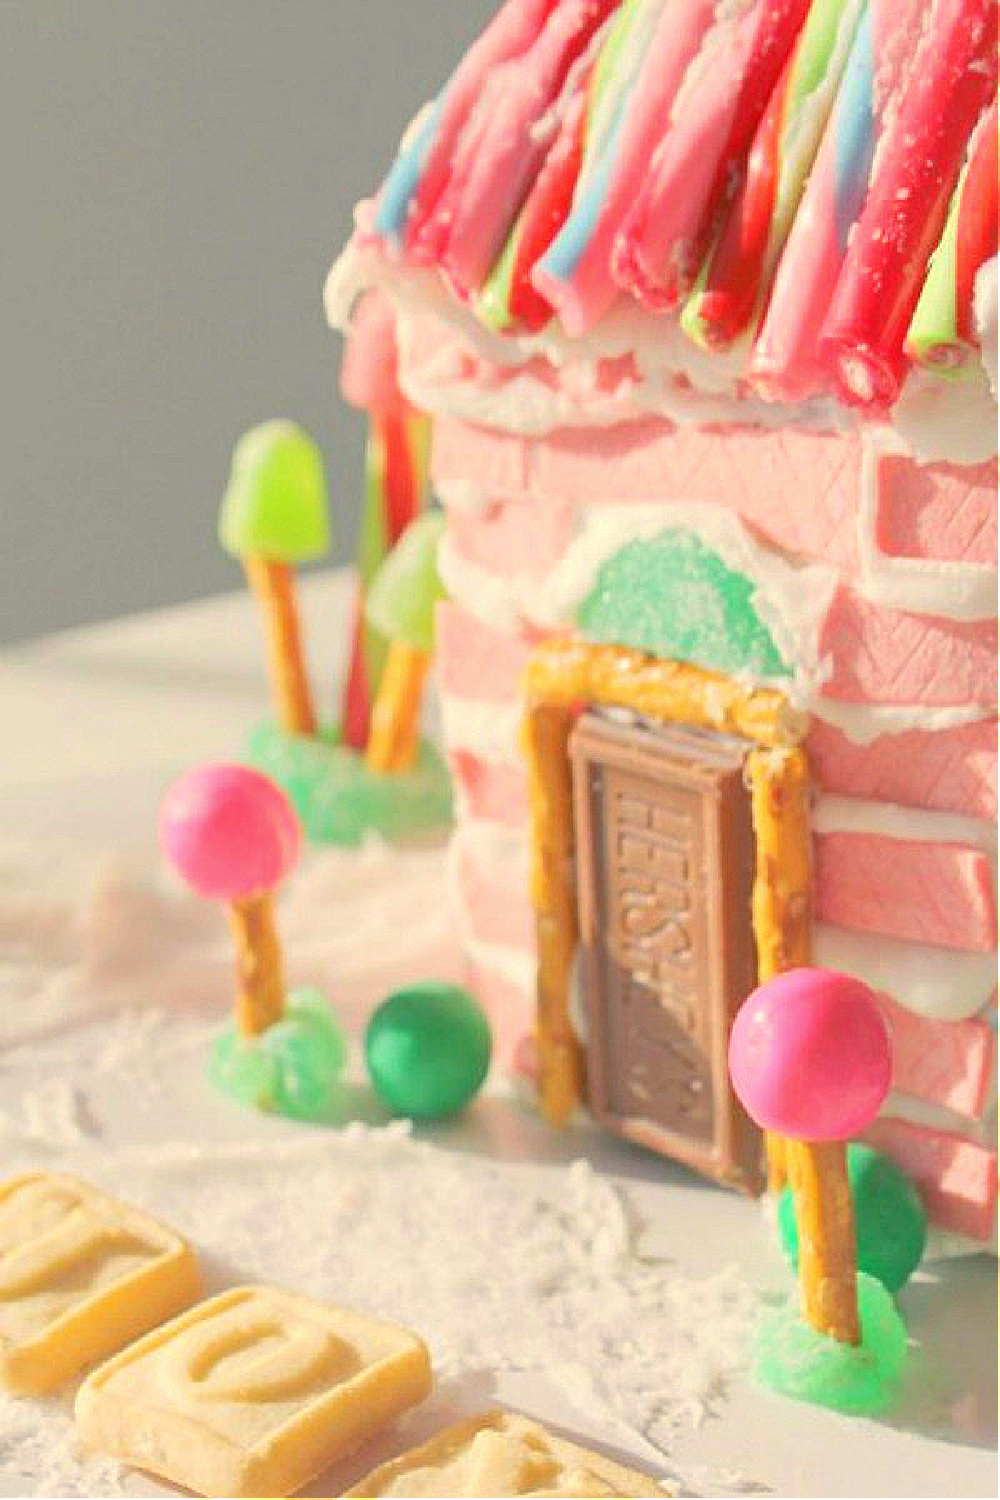 Gingerbread House Ideas & Inspiration #hellolovelystudio #pinkchristmas #gingerbreadhouse